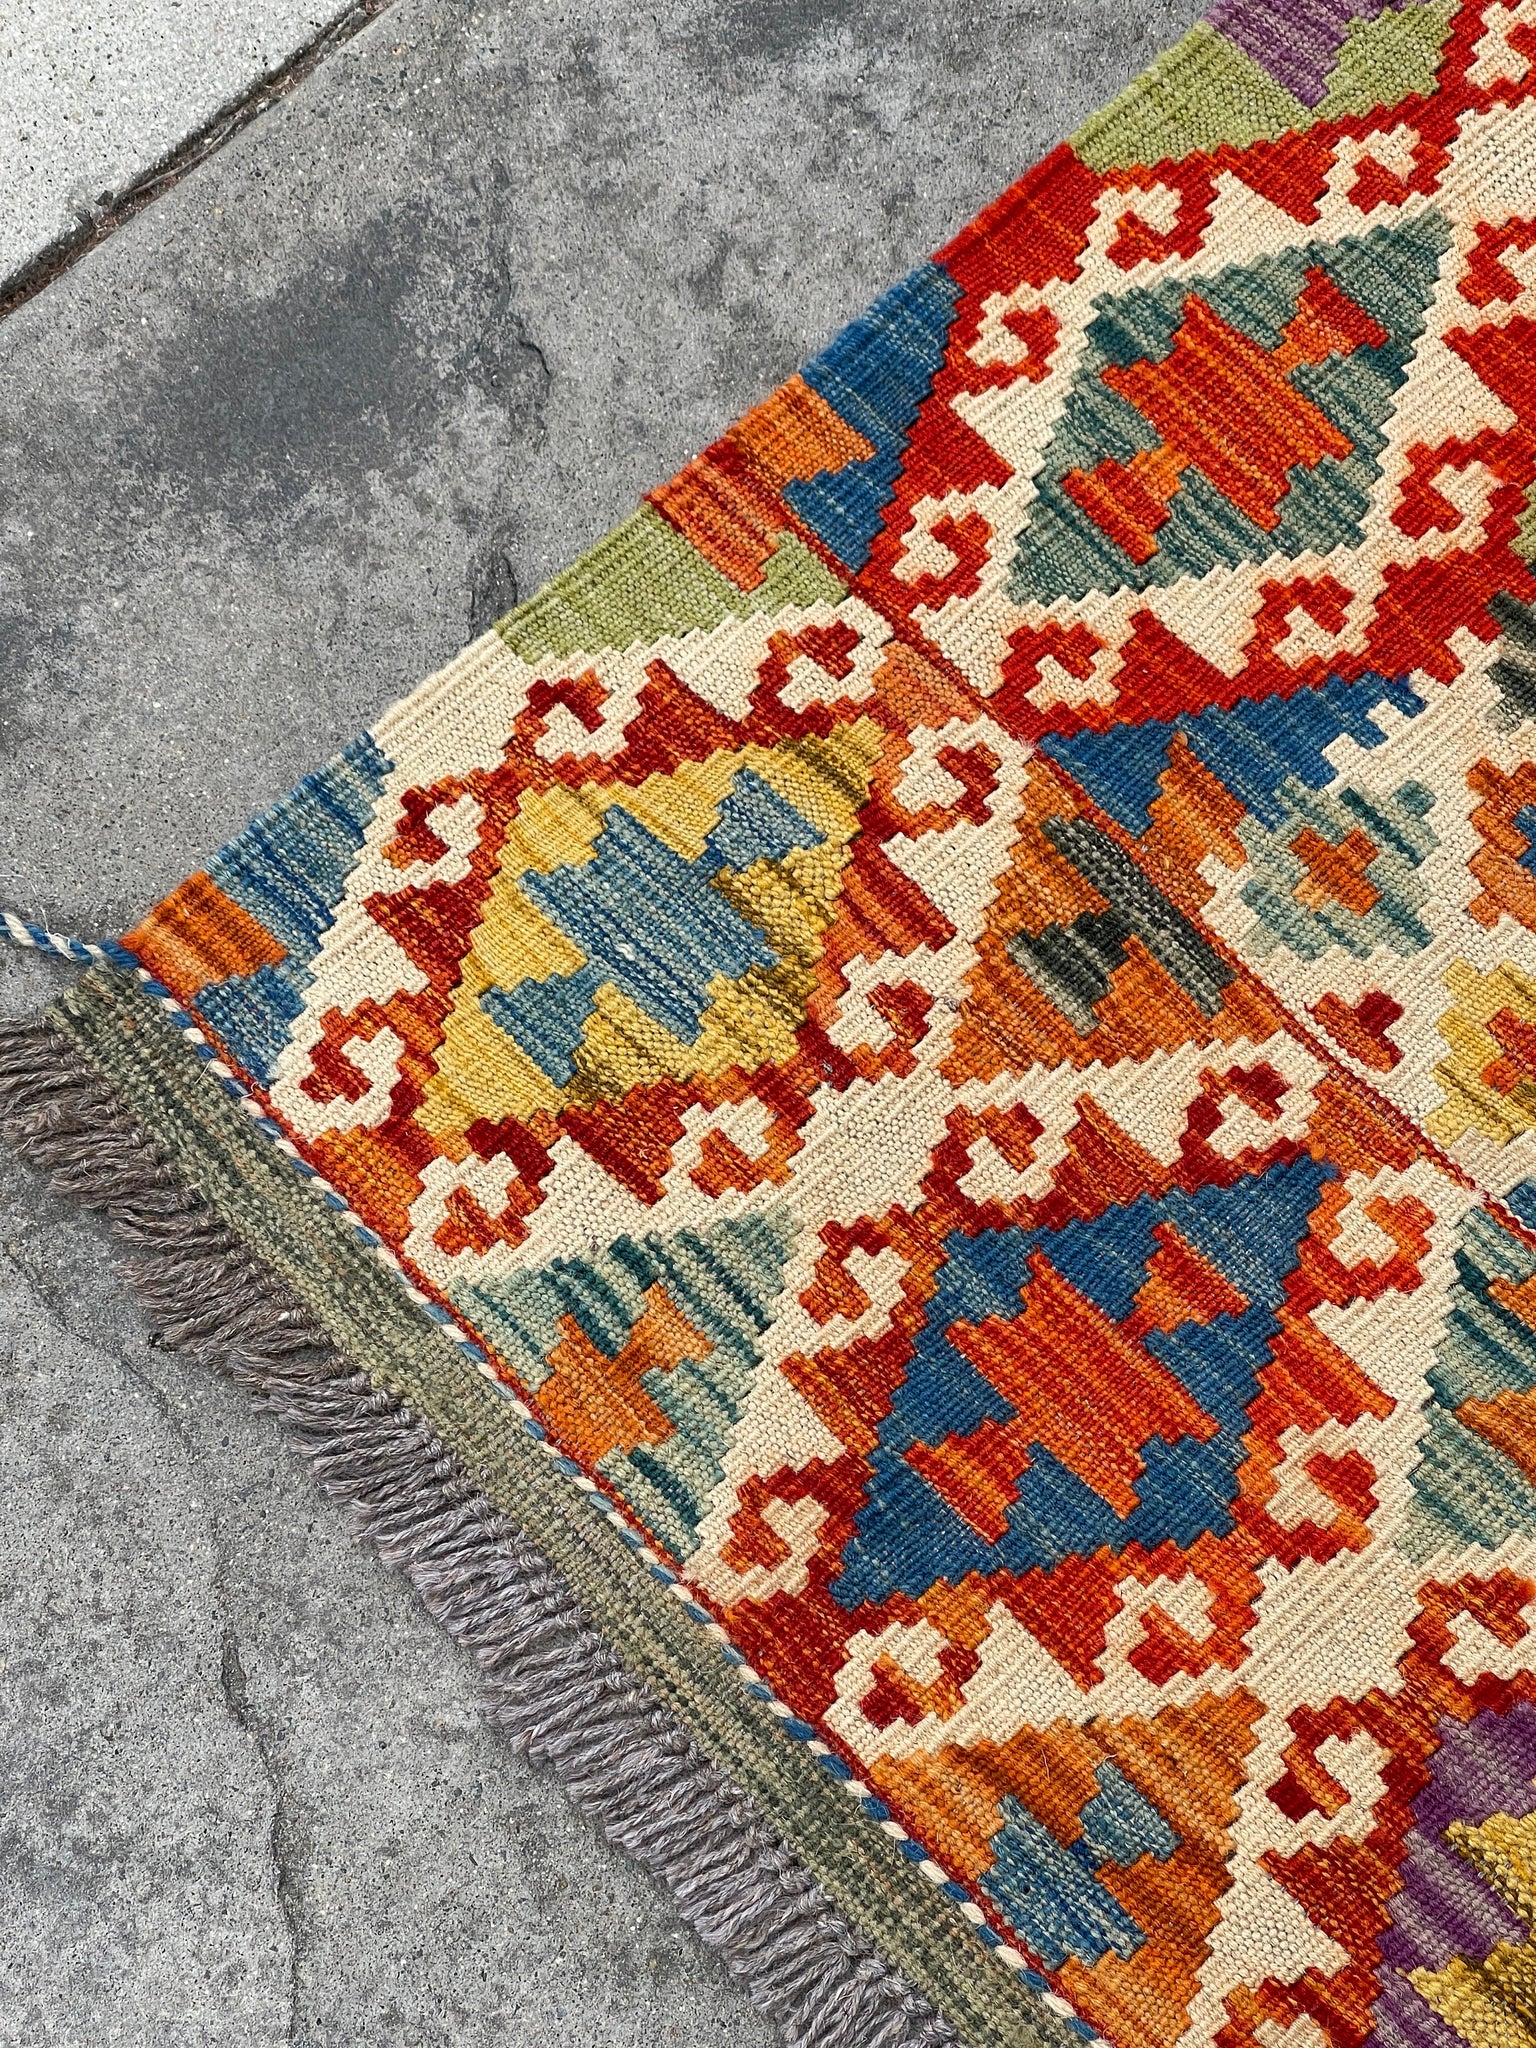 3x16 (90x490) Handmade Kilim Afghan Runner Rug | Burnt Orange Ivory Blue Green Purple Colorful | Flat Weave Flatweave Tribal Nomadic Turkish